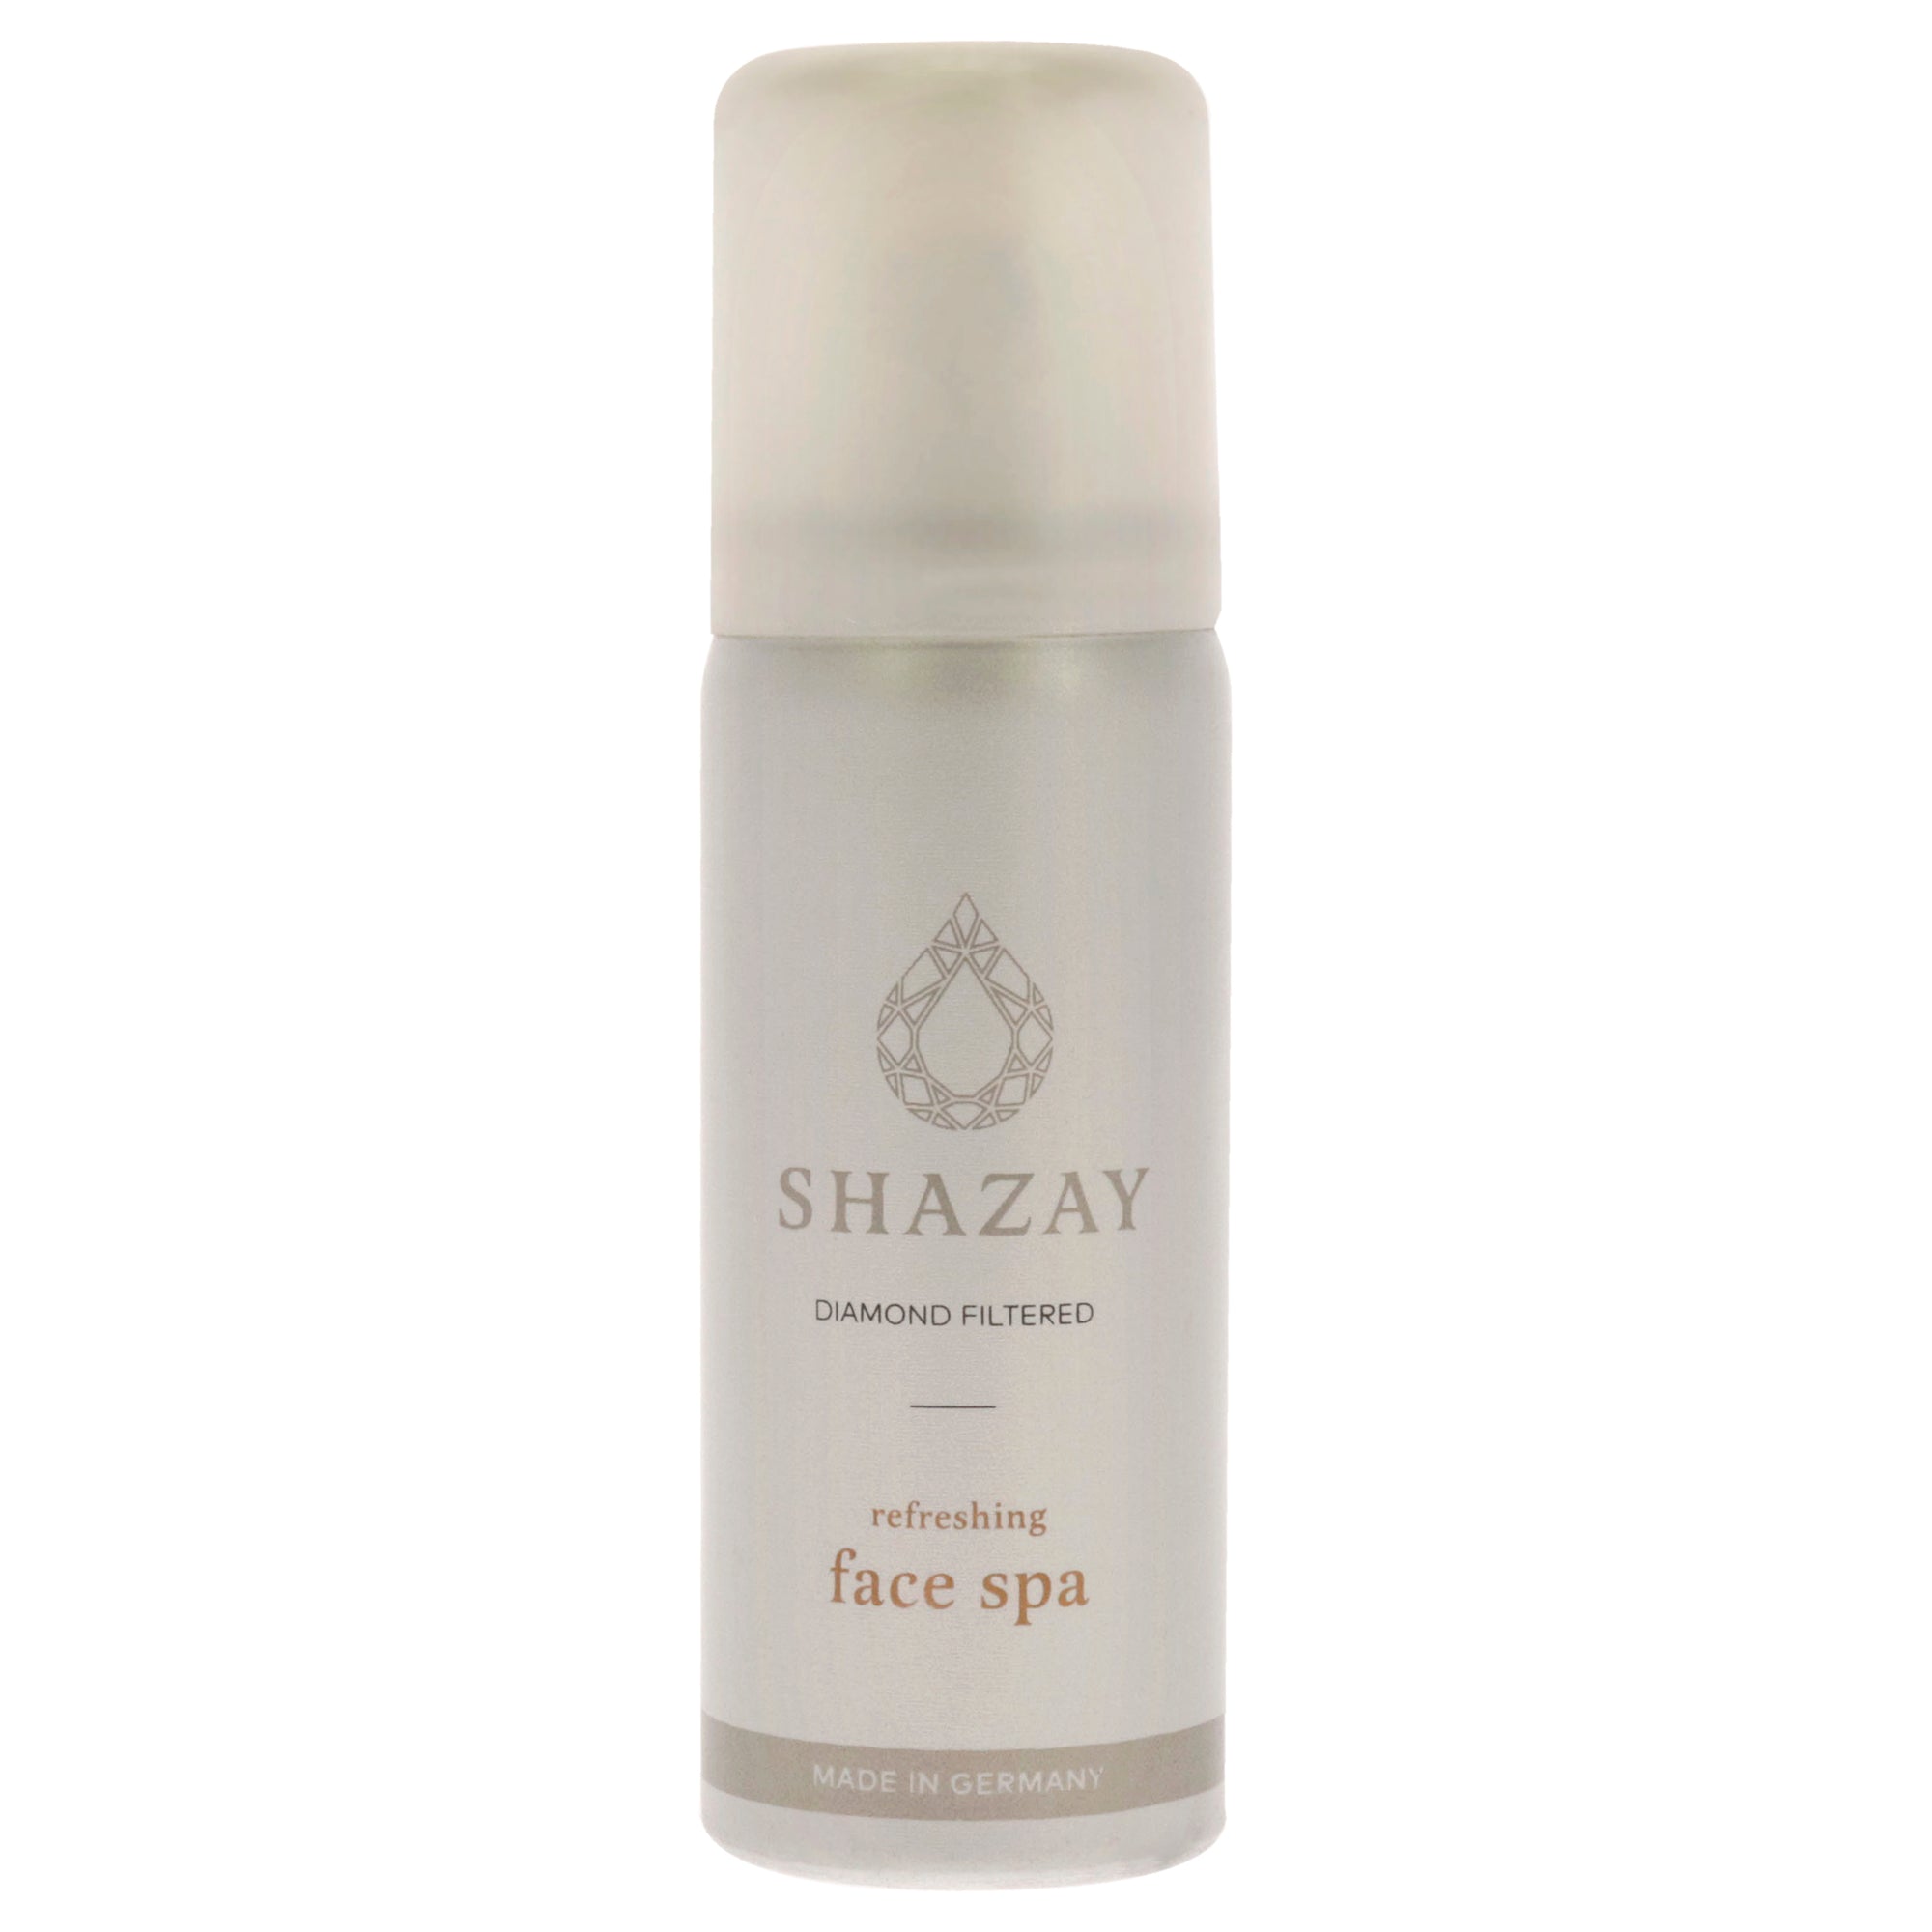 Refreshing Face Spa by Shazay for Unisex - 1.69 oz Spray